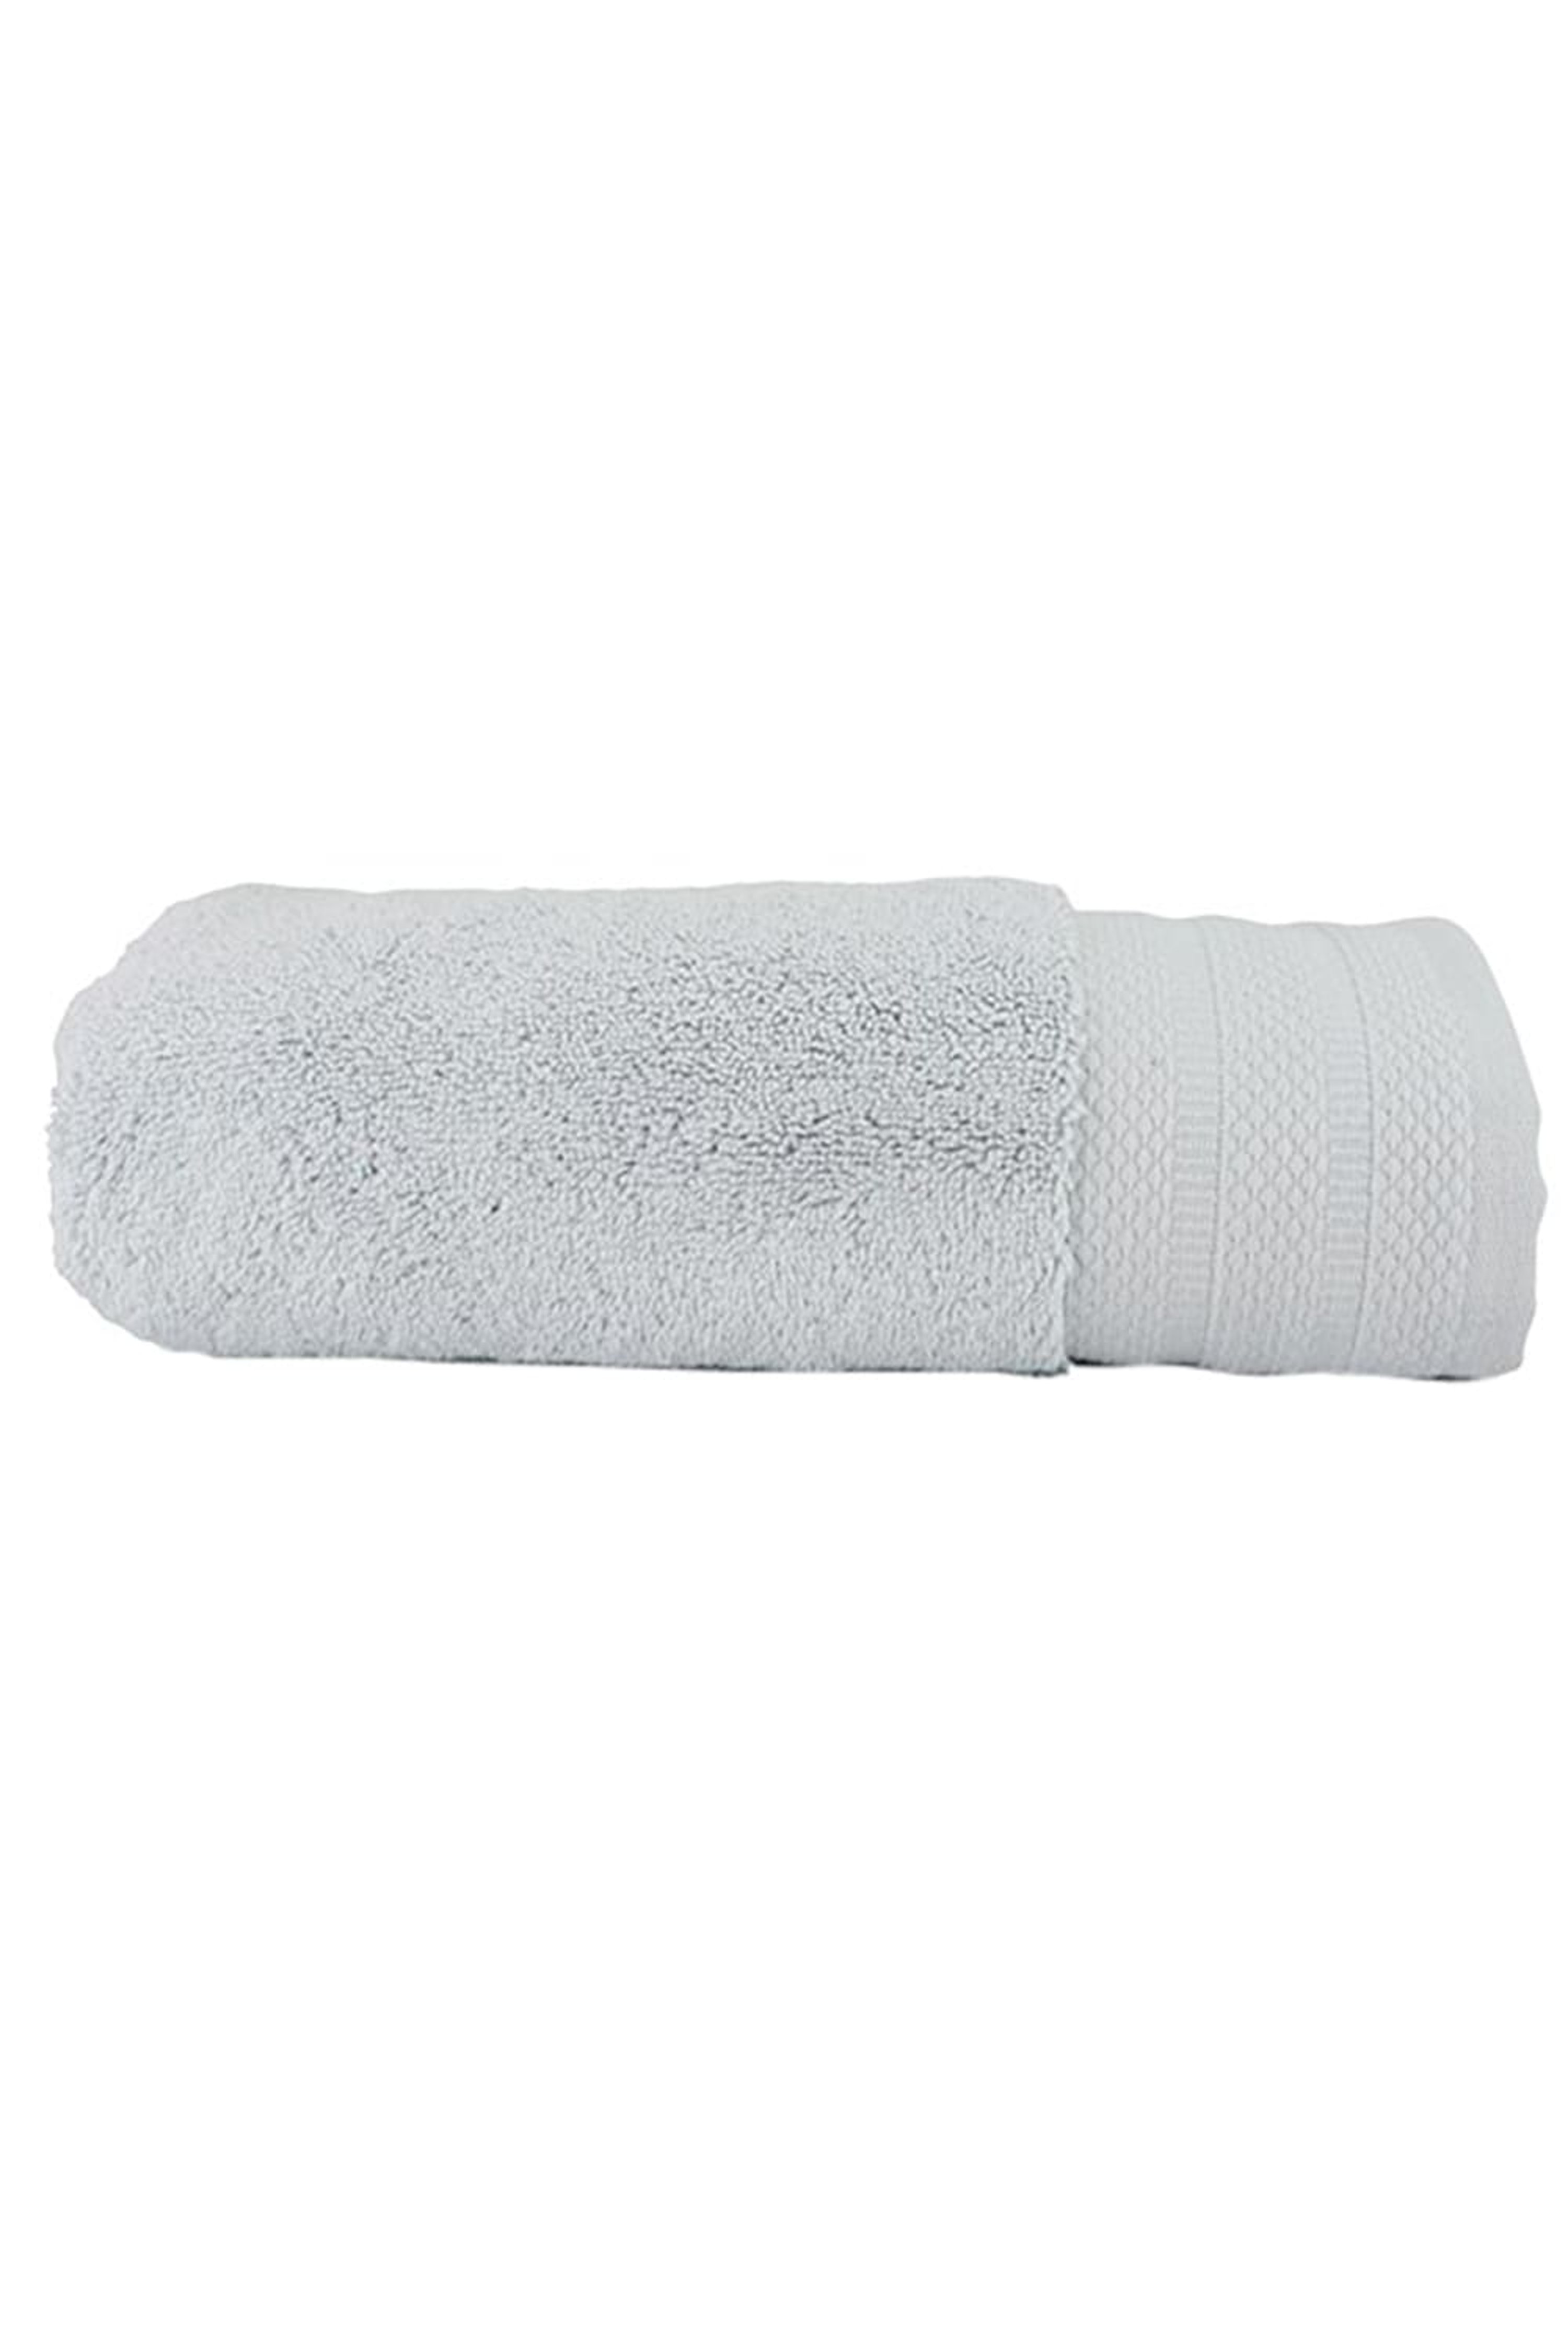 A&R TOWELS A&R TOWELS A&R TOWELS PURE LUXE HAND TOWEL (LIGHT GREY) (ONE SIZE)